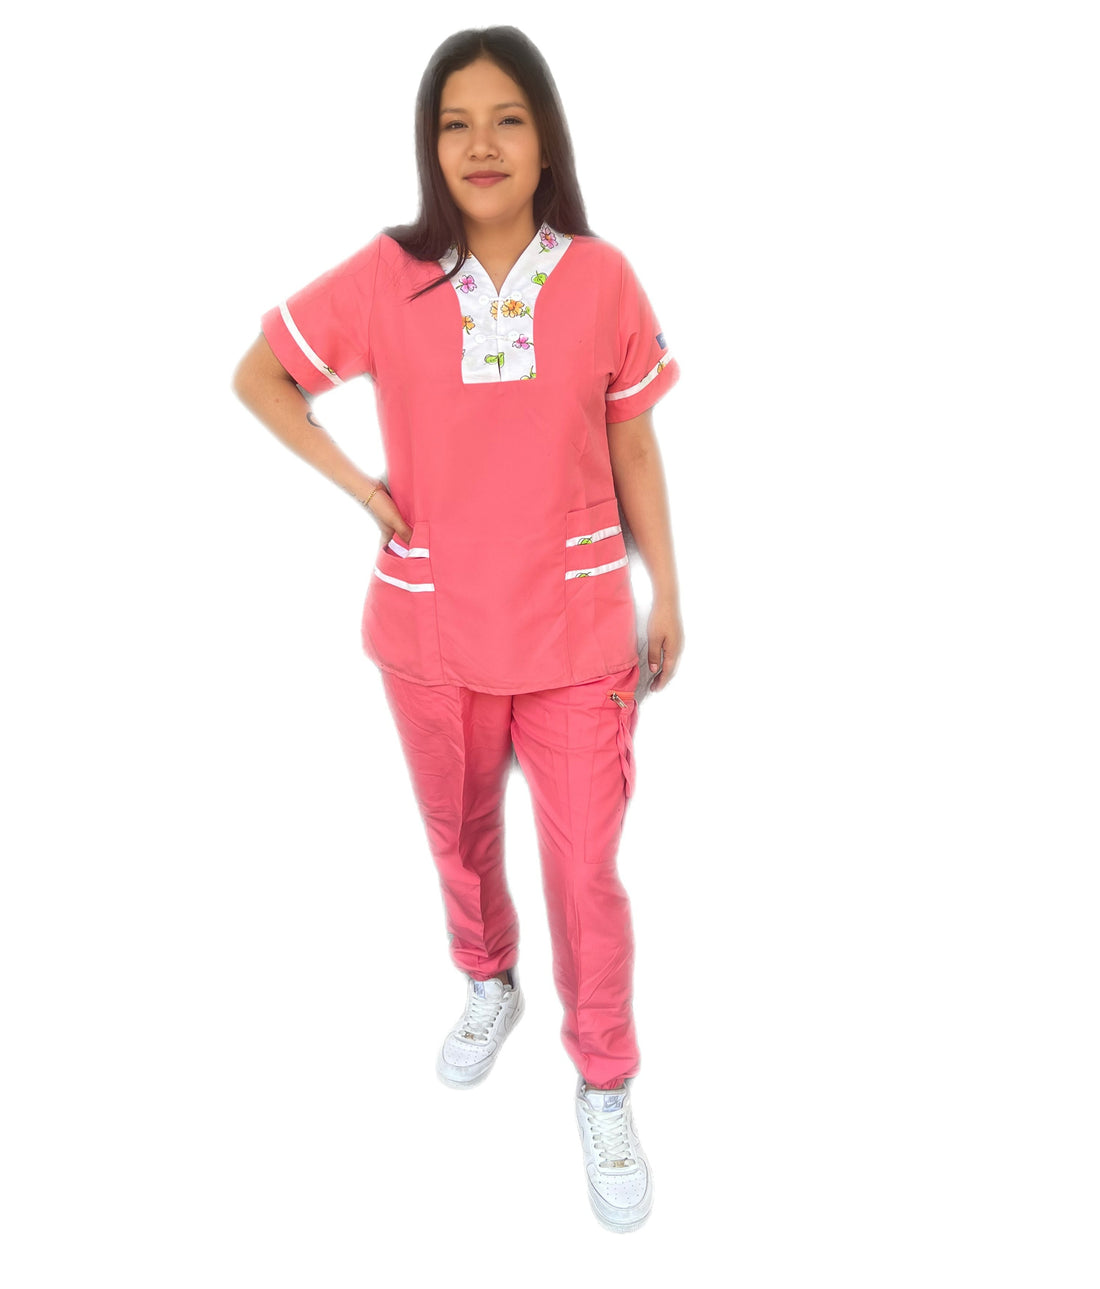 Pijama quirurgica San José para mujer repelente spandex uniformes Stanford